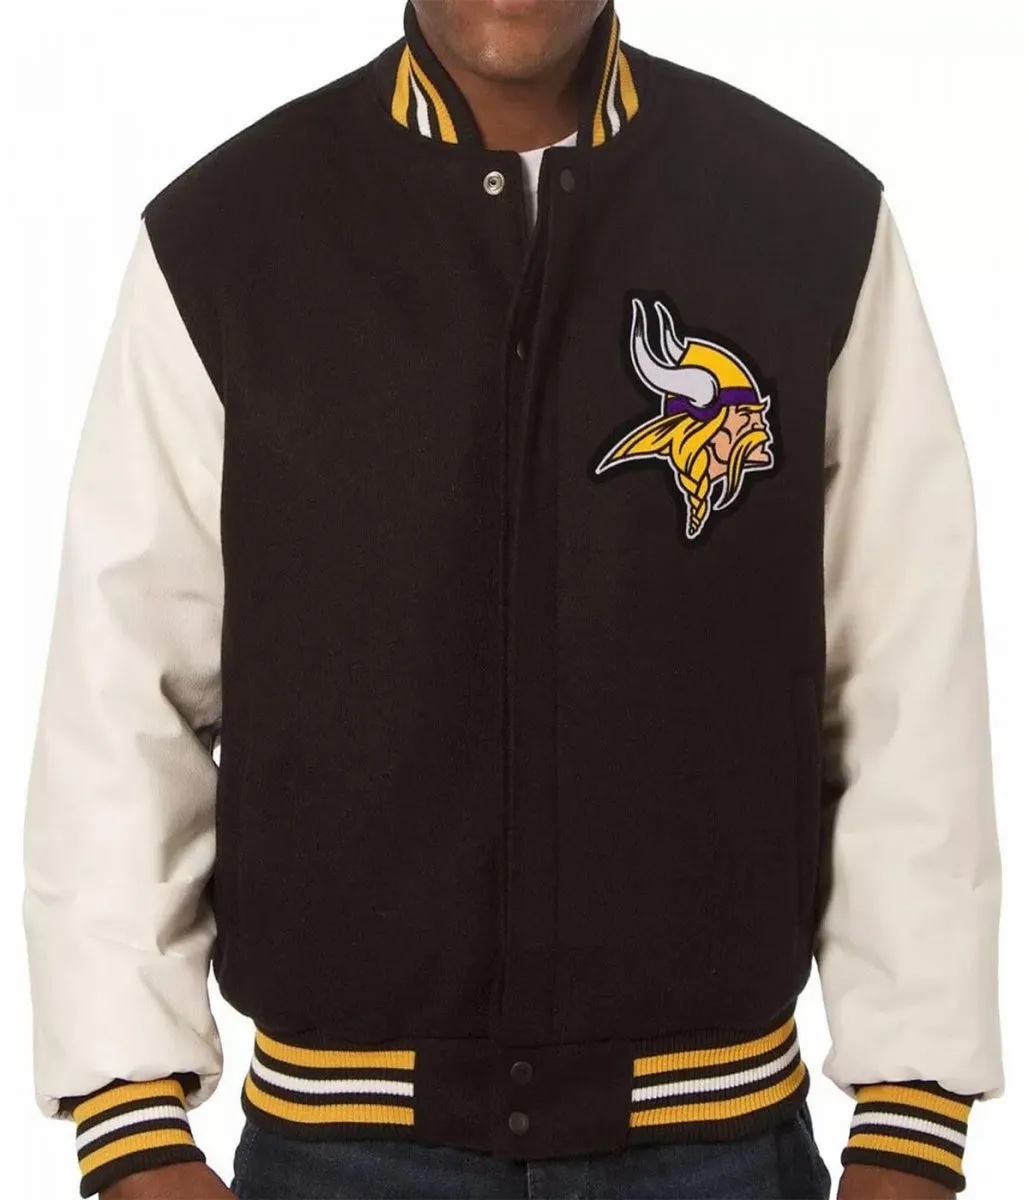 Minnesota Vikings Varsity White and Black Jacket